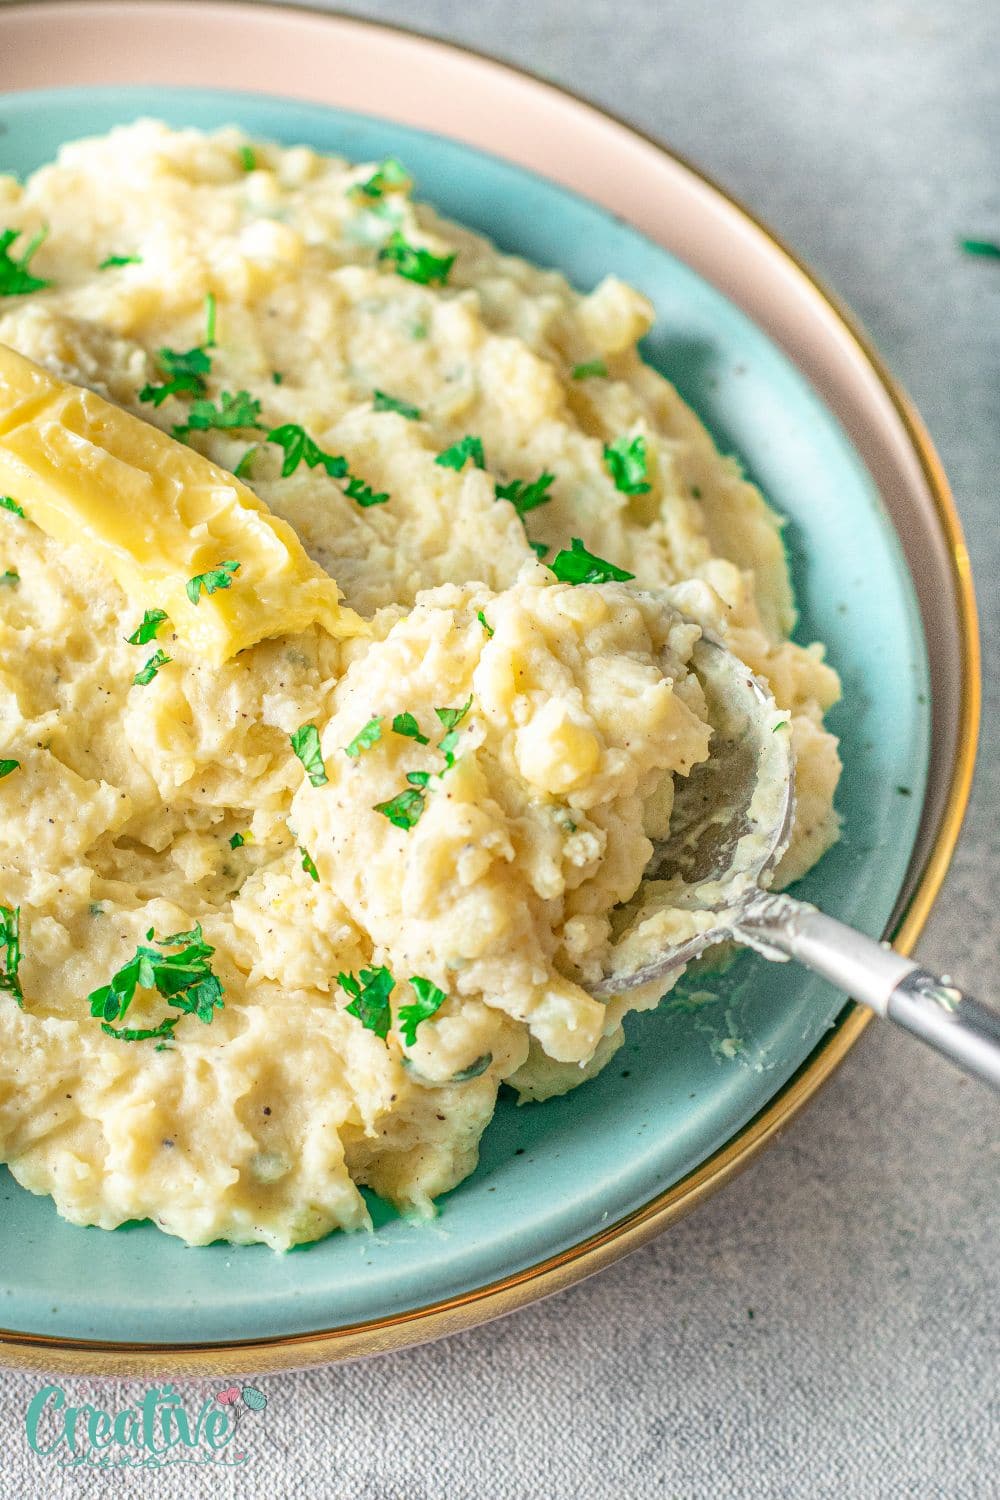 Instant Pot mashed potatoes